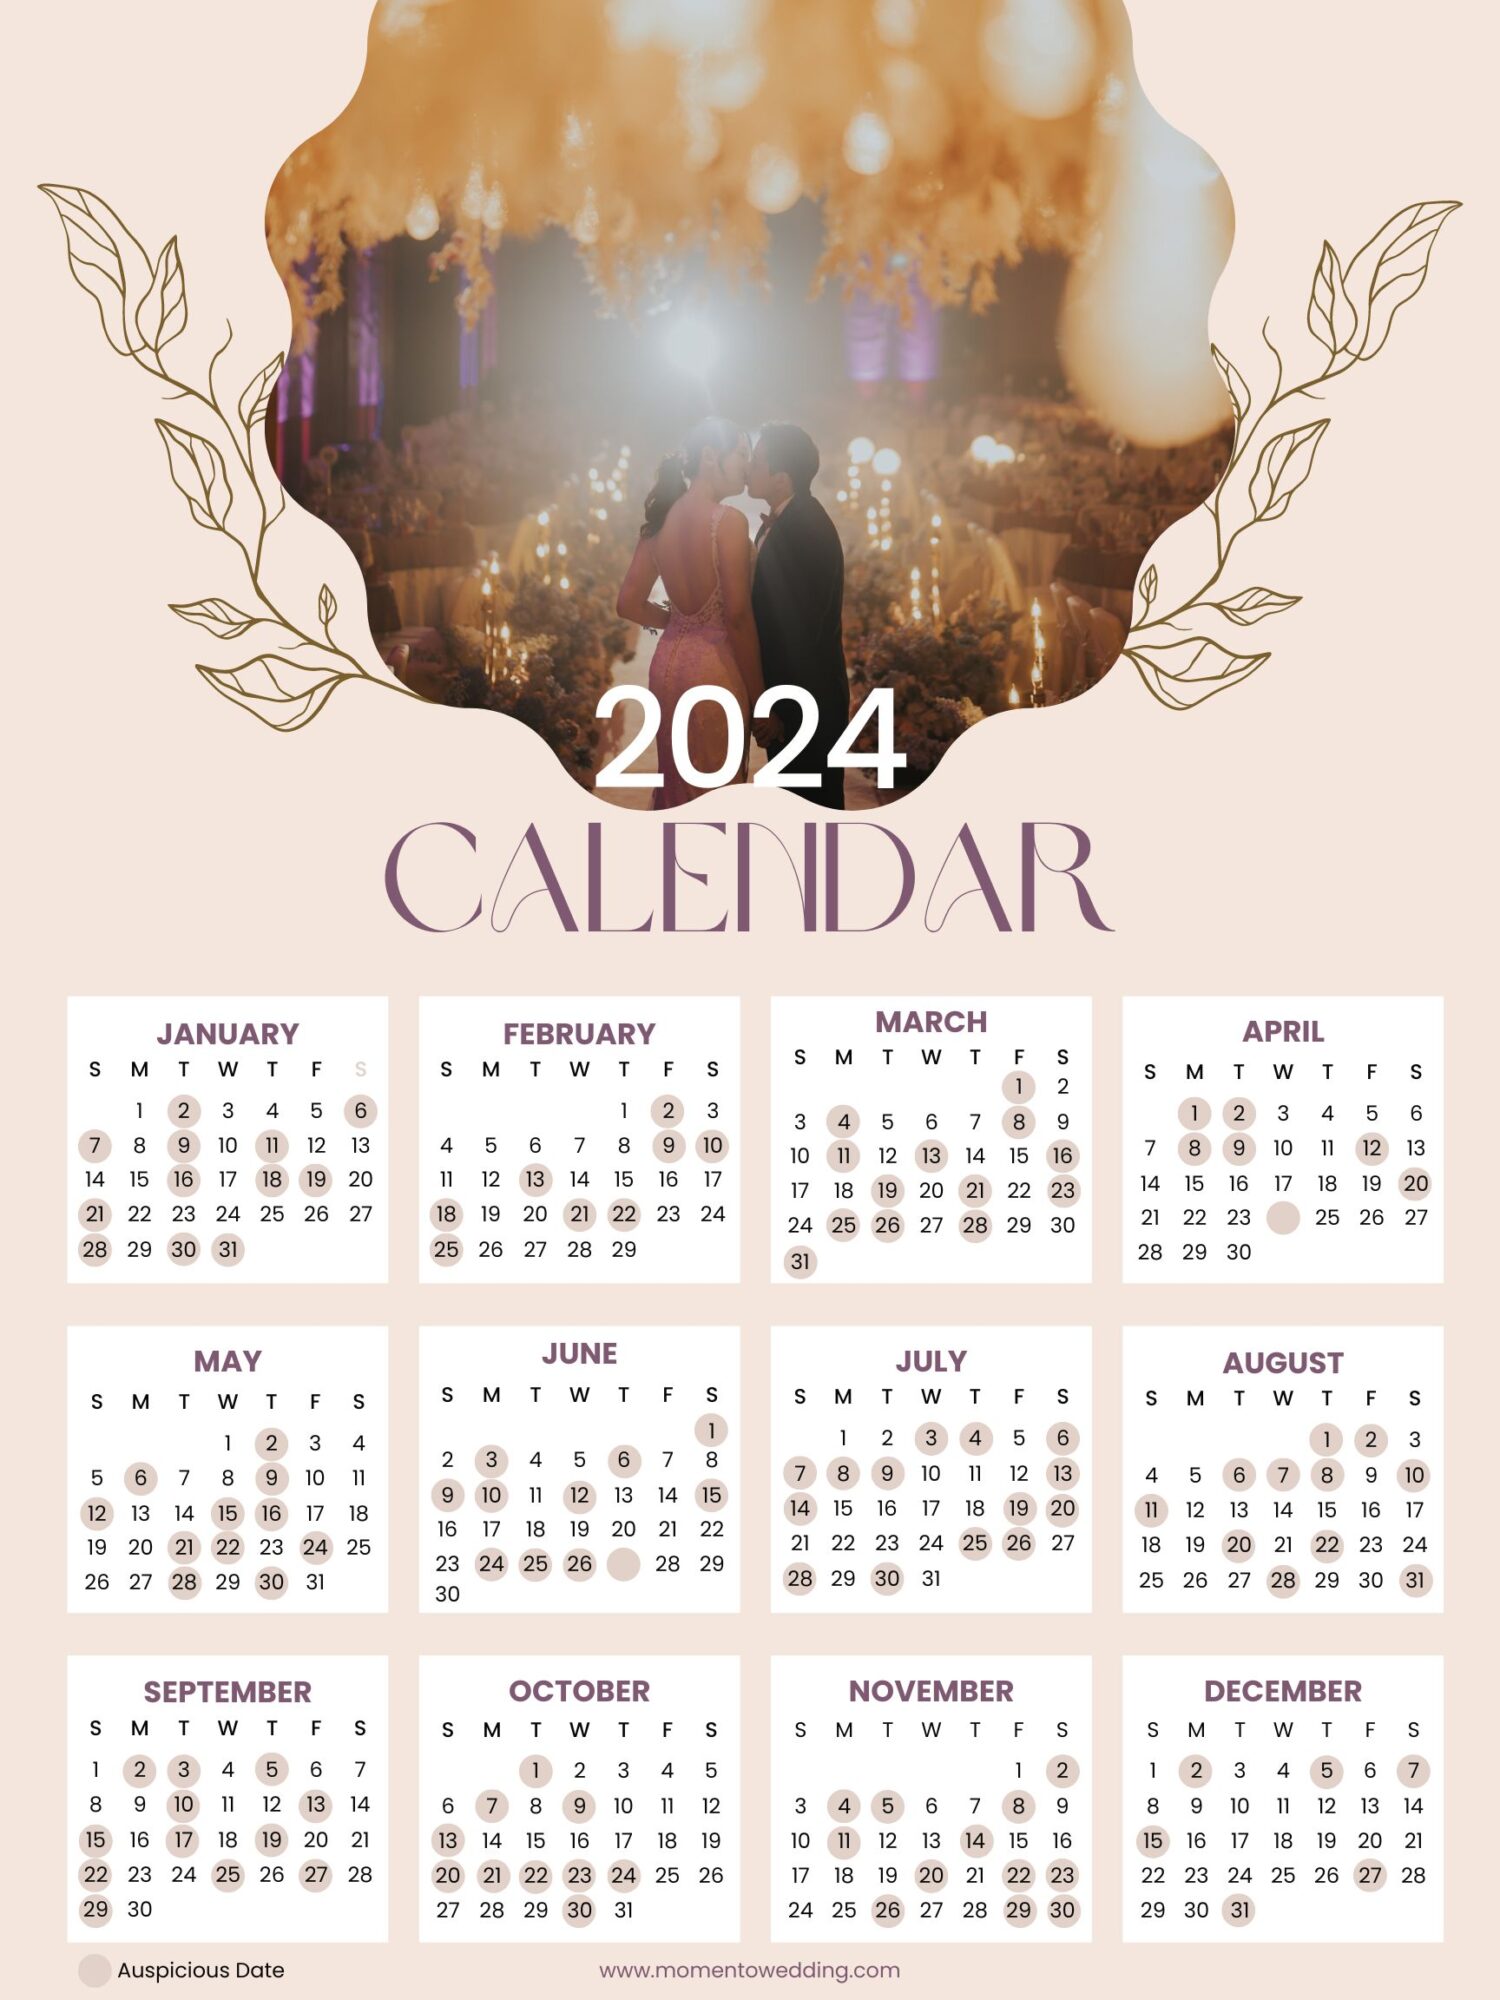 Auspicious Wedding Dates in 2024 - MomentoWedding